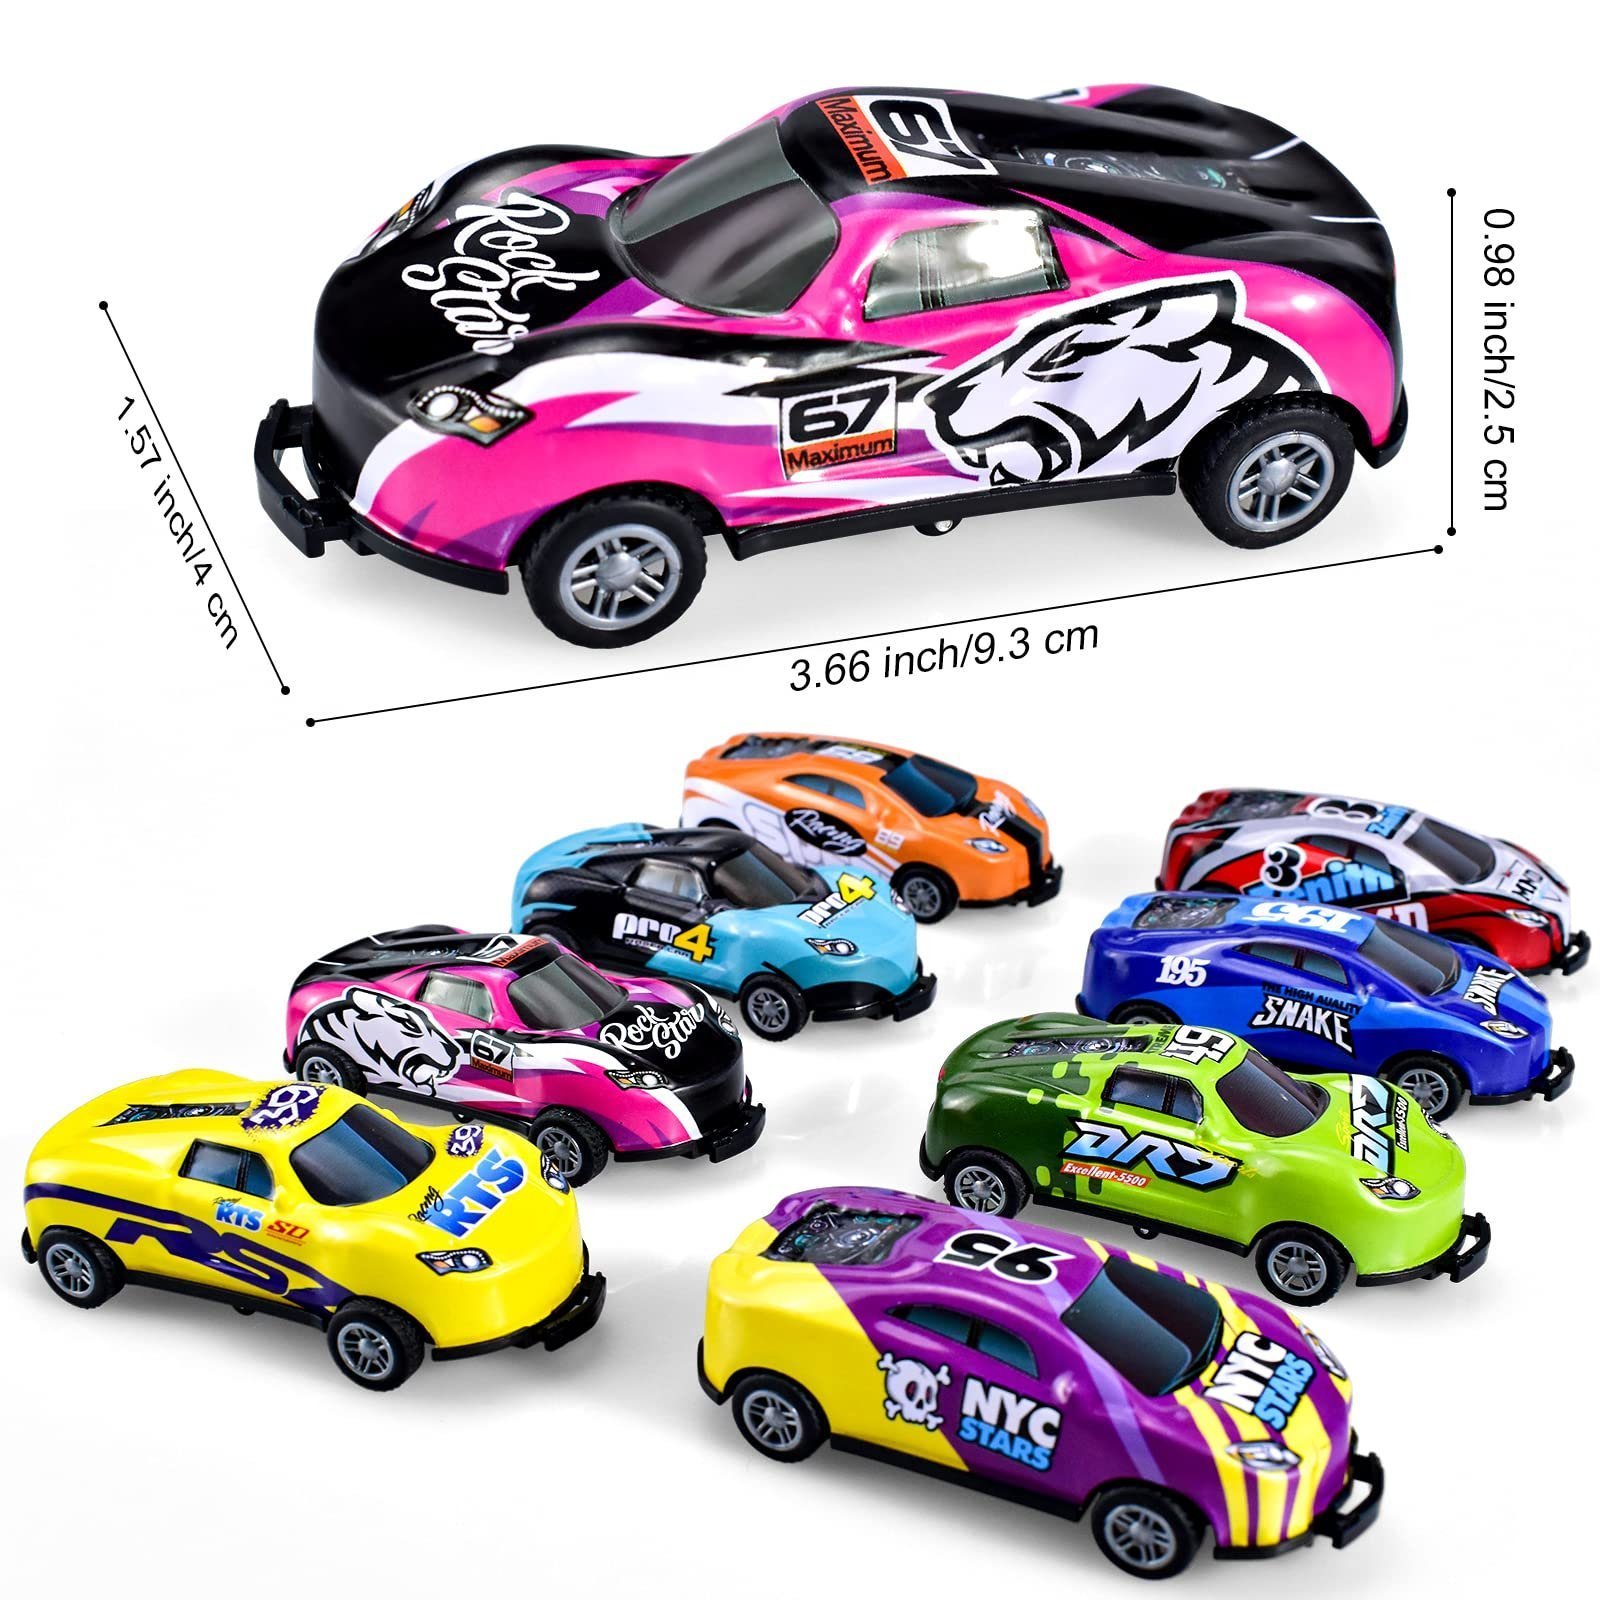 🎅EARLY XMAS SALE 65% OFF❤️Children's Stunt Toy Car